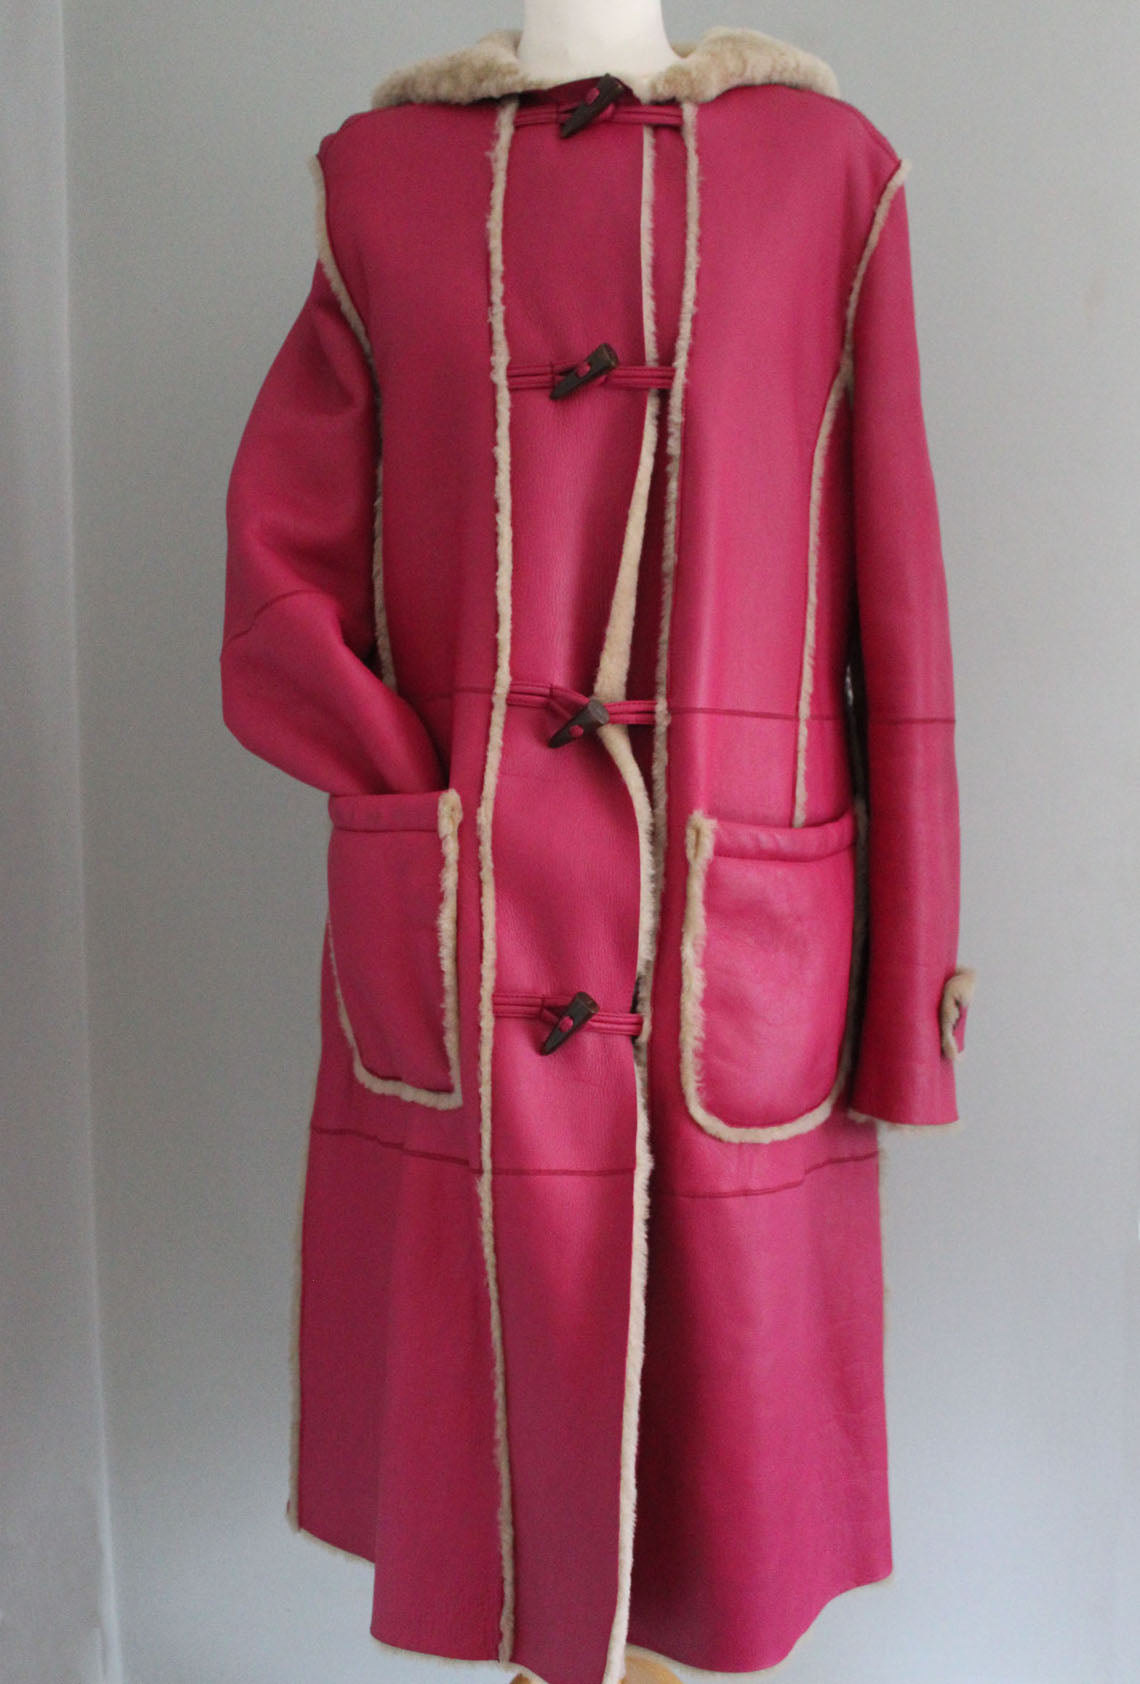 Escada Sport 1980's Magenta Shearling Long Duffle Coat